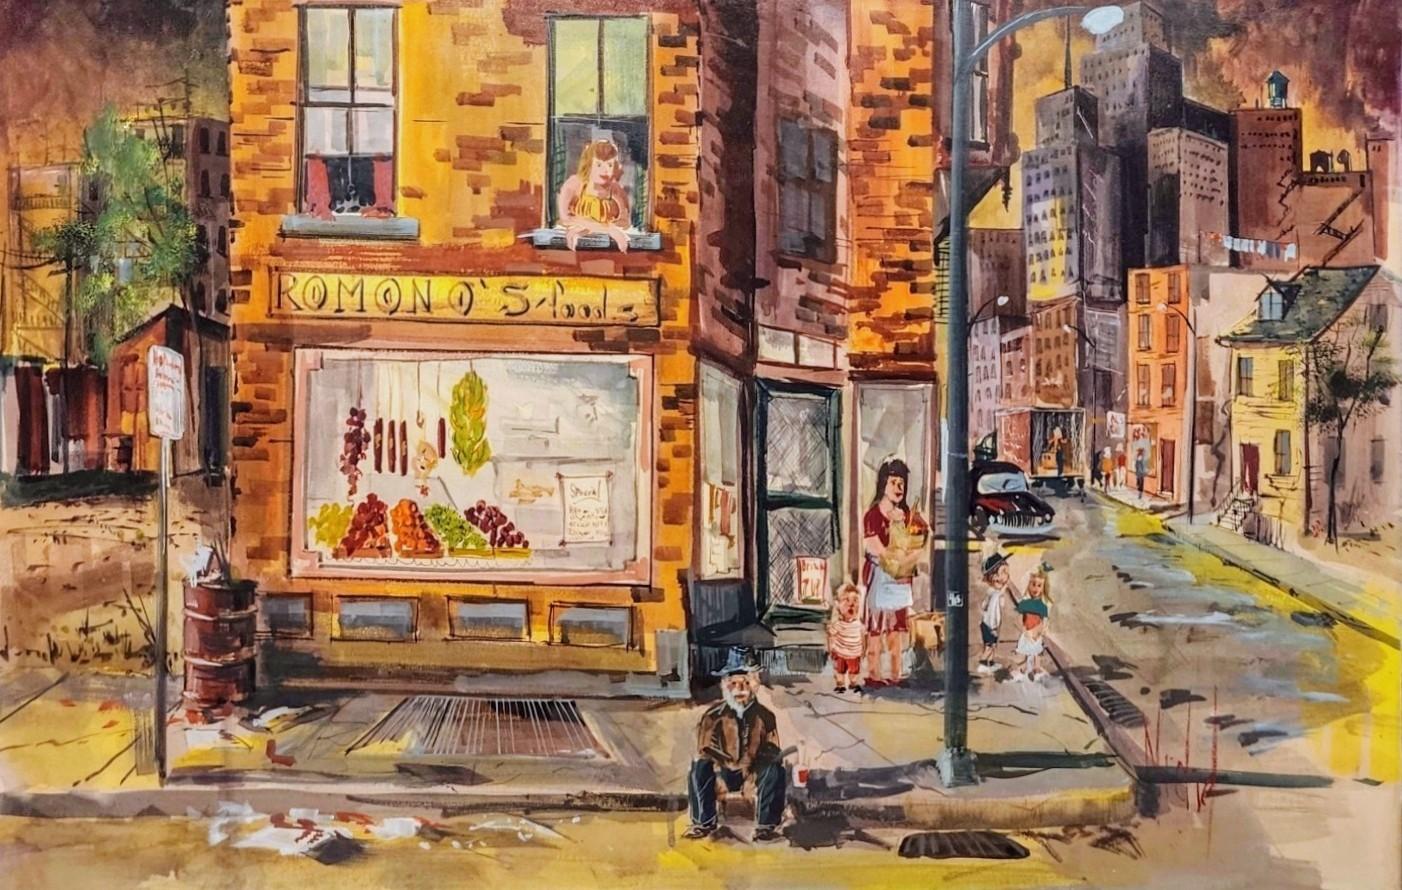 Ramono's Foods, Chicago Street Scene, Vintage, 1960s City Scene - Painting by Margaret Michel